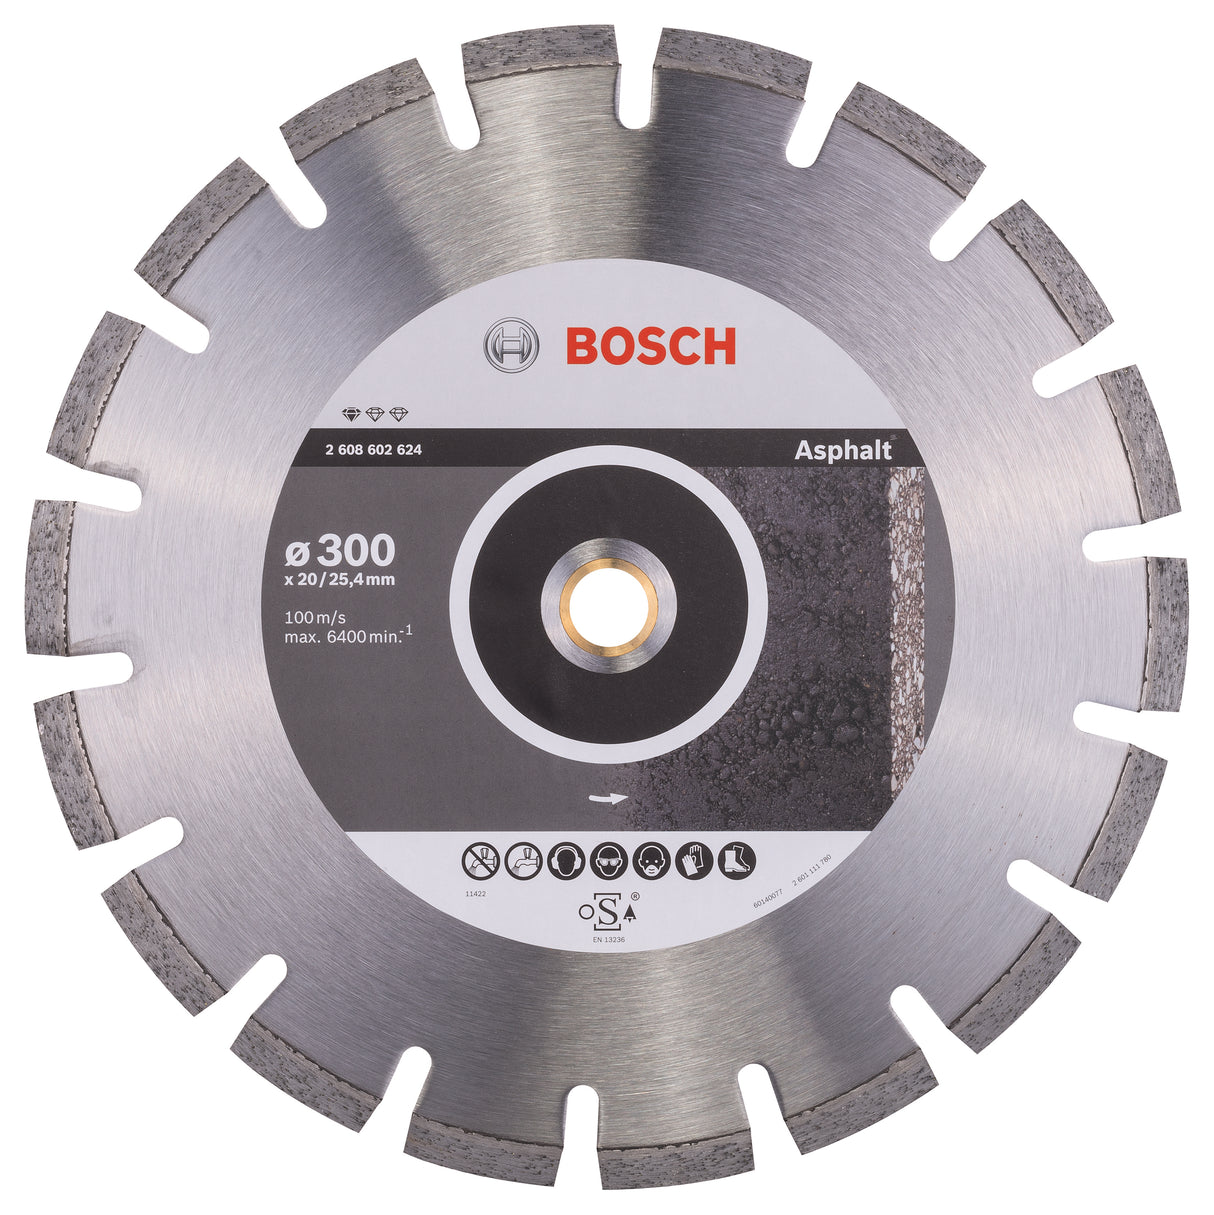 Bosch Professional Diamond Cutting Disc for Asphalt - 300 x 20/25,40 x 2,8 x 10 mm